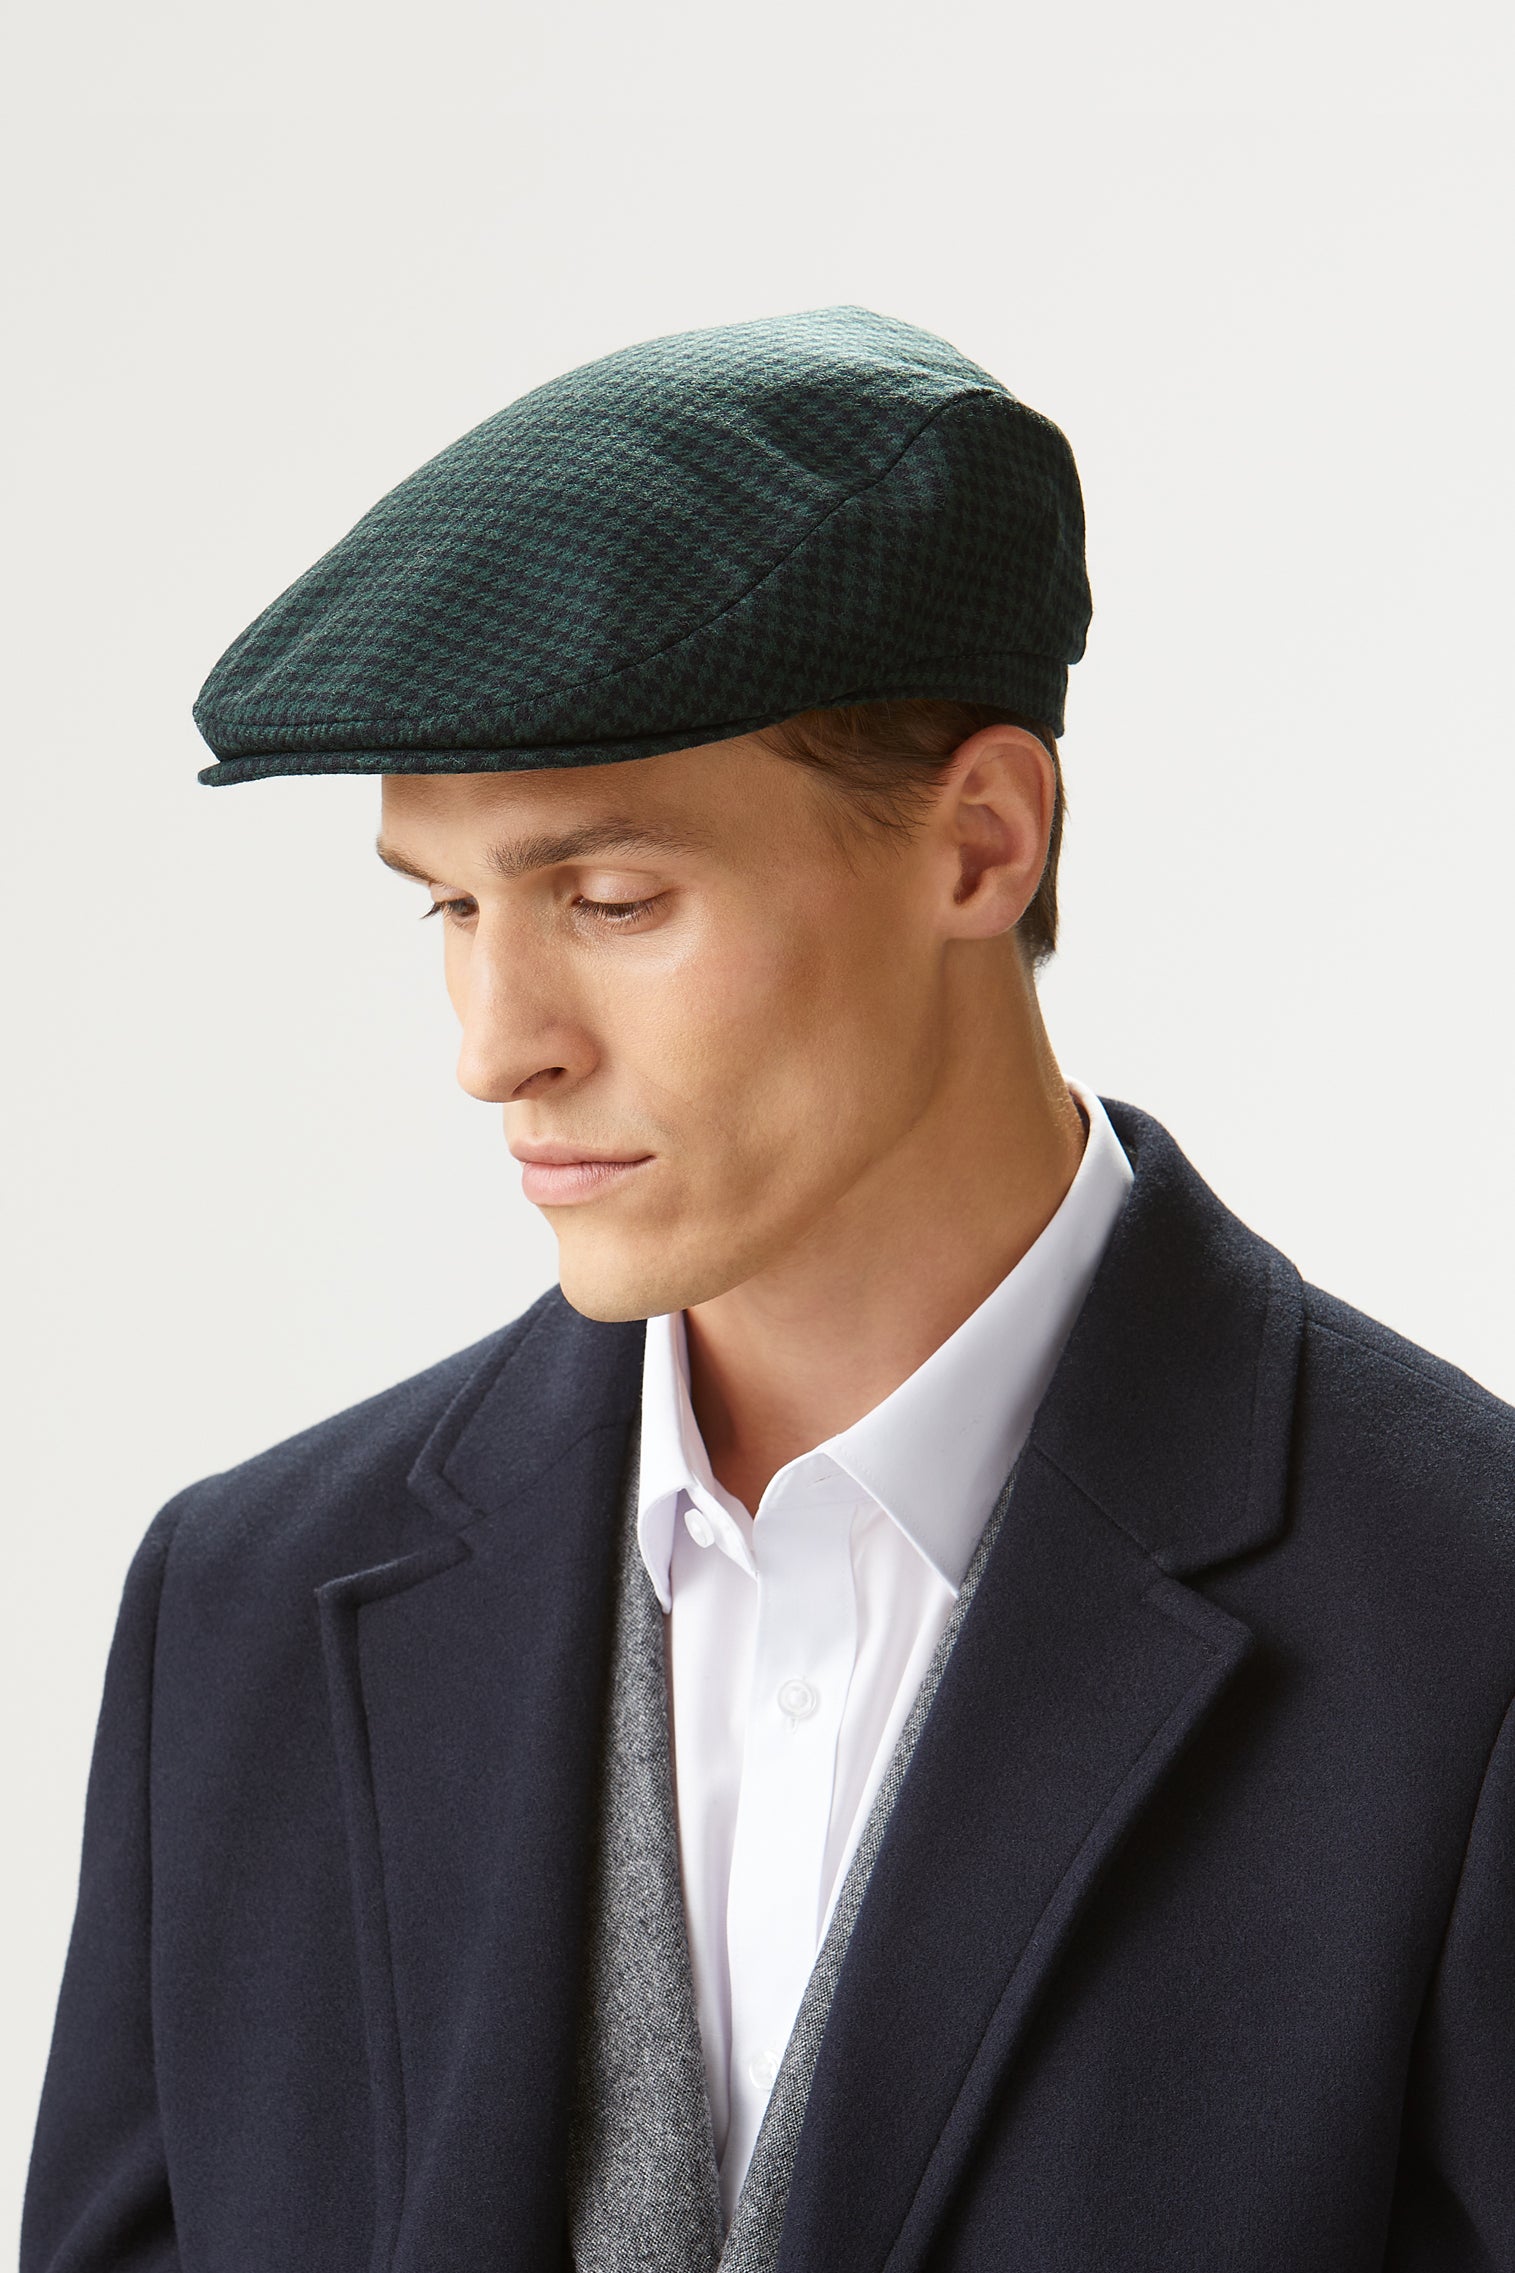 Grosvenor Houndstooth Flat Cap - New Season Men's Hats - Lock & Co. Hatters London UK